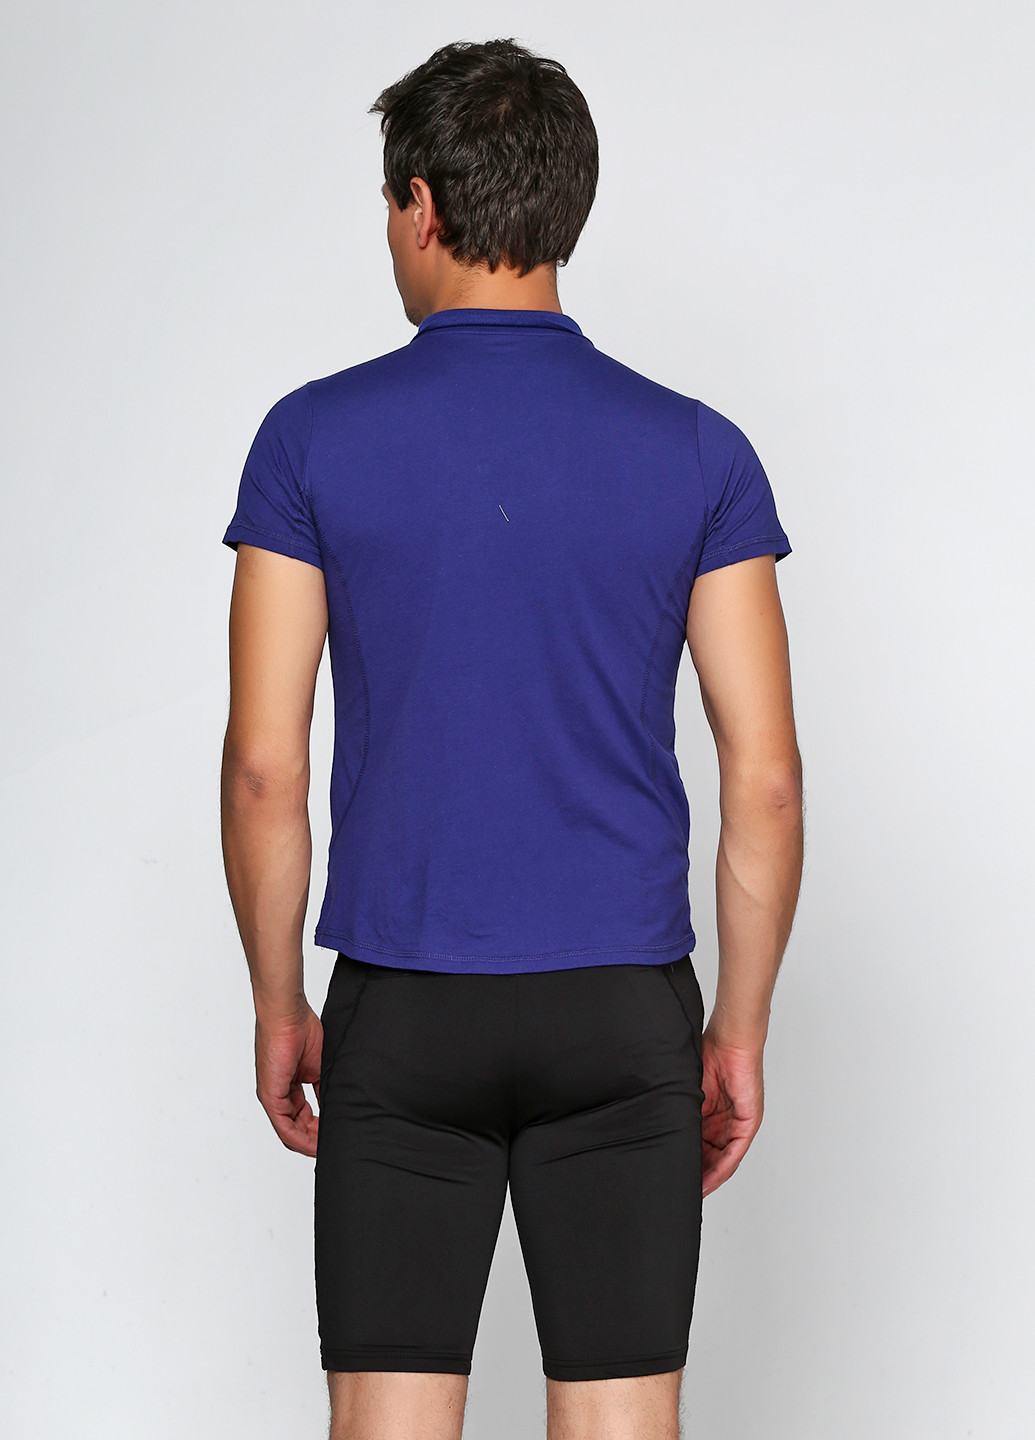 Фиолетовая футболка-поло для мужчин Crivit однотонная